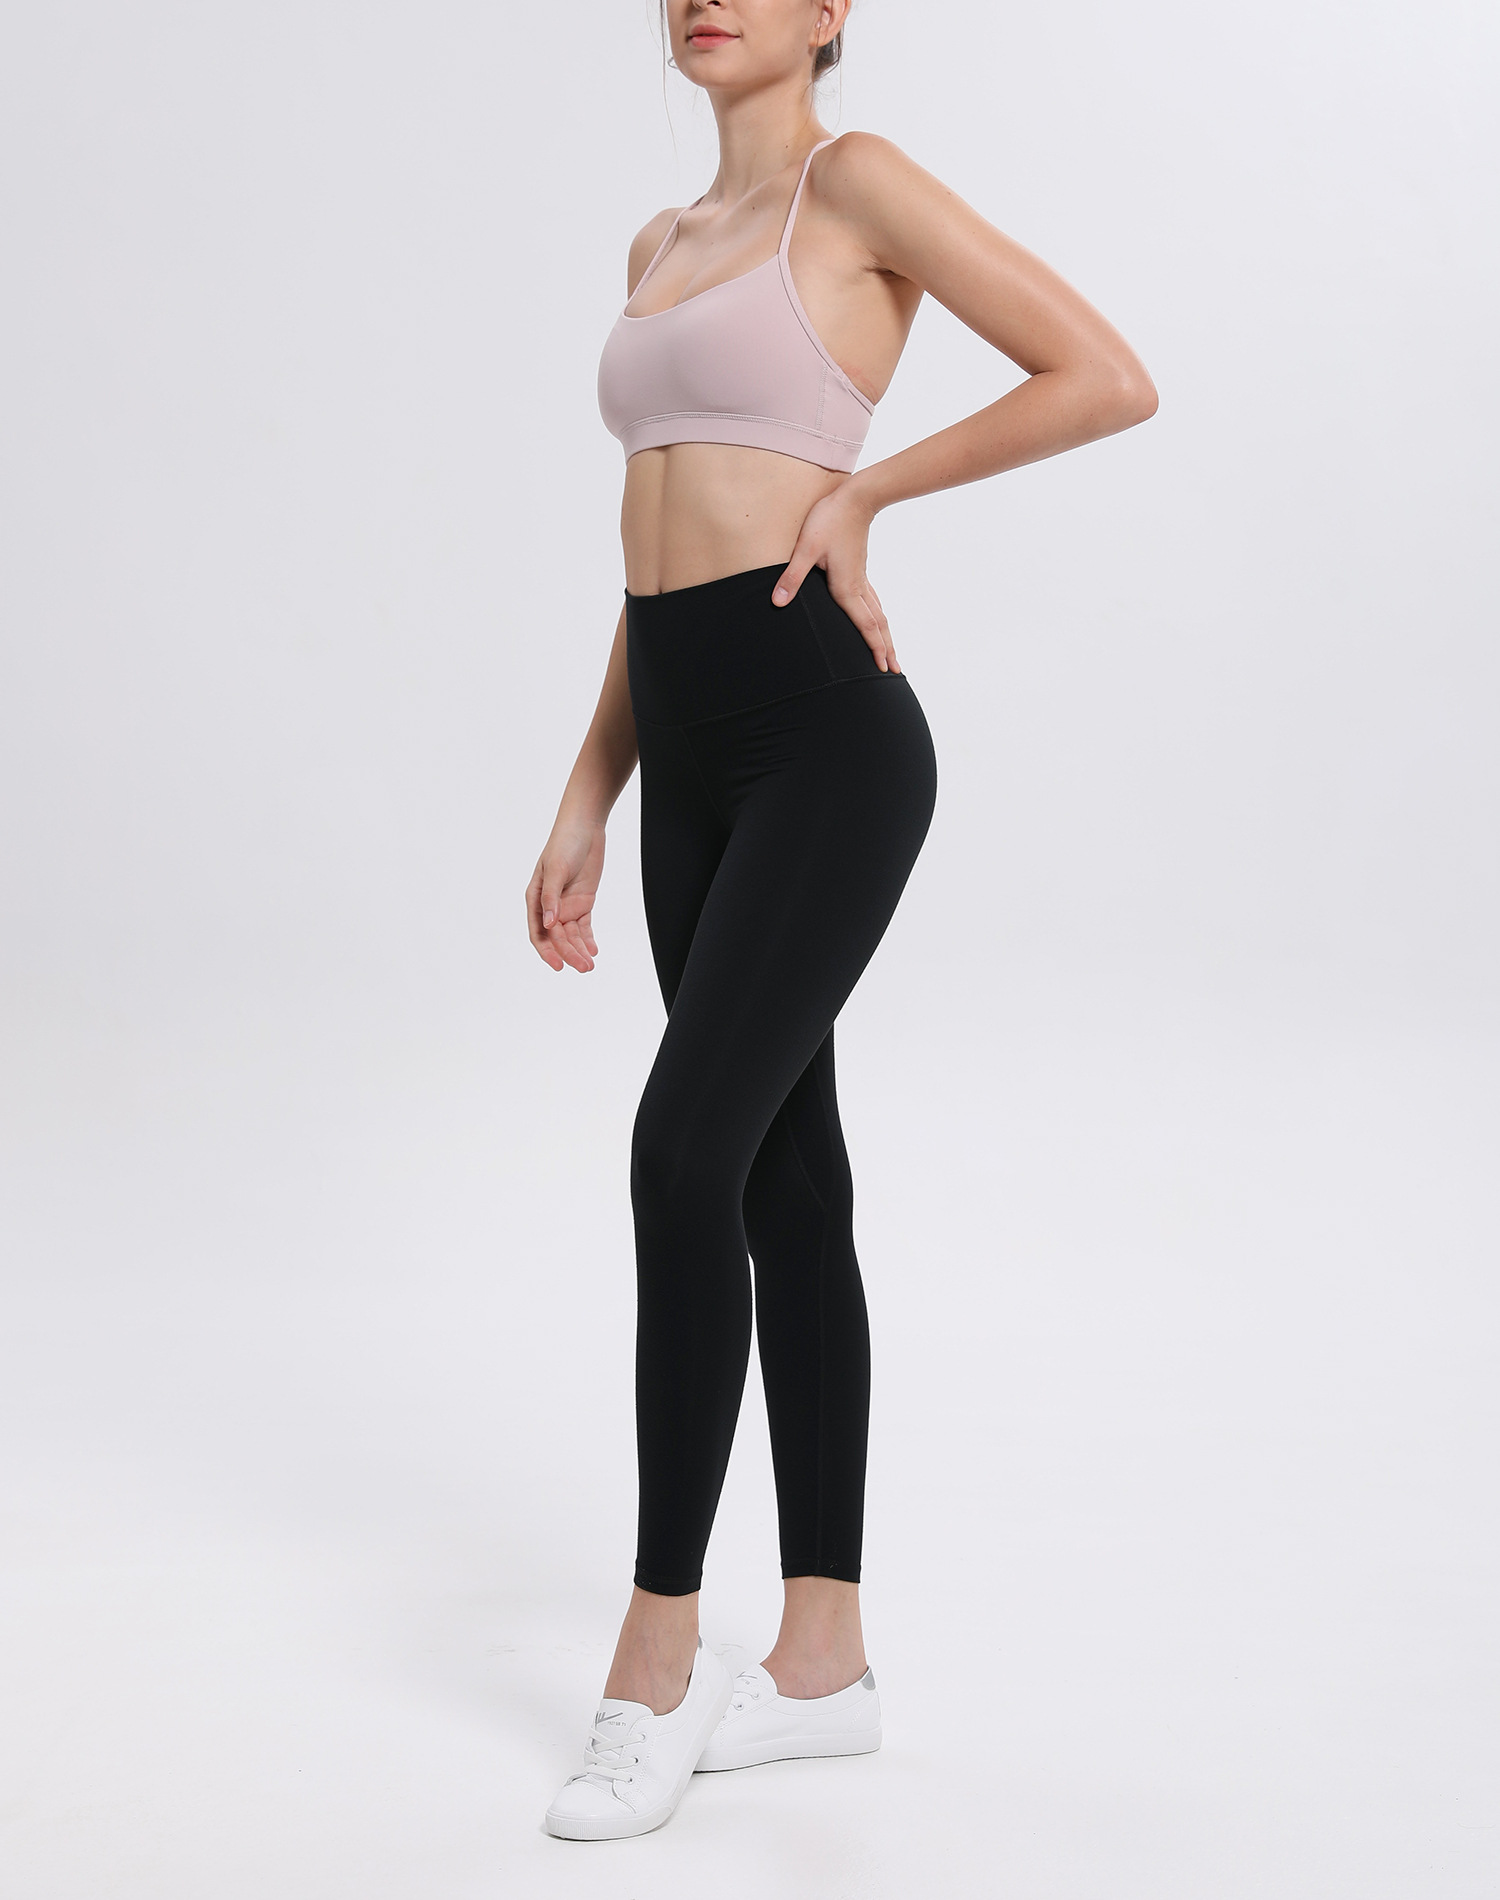 Black Running Leggings Lululemon Workout Pants Sexy Yoga Pants Supplier -  Honest FulPhilment